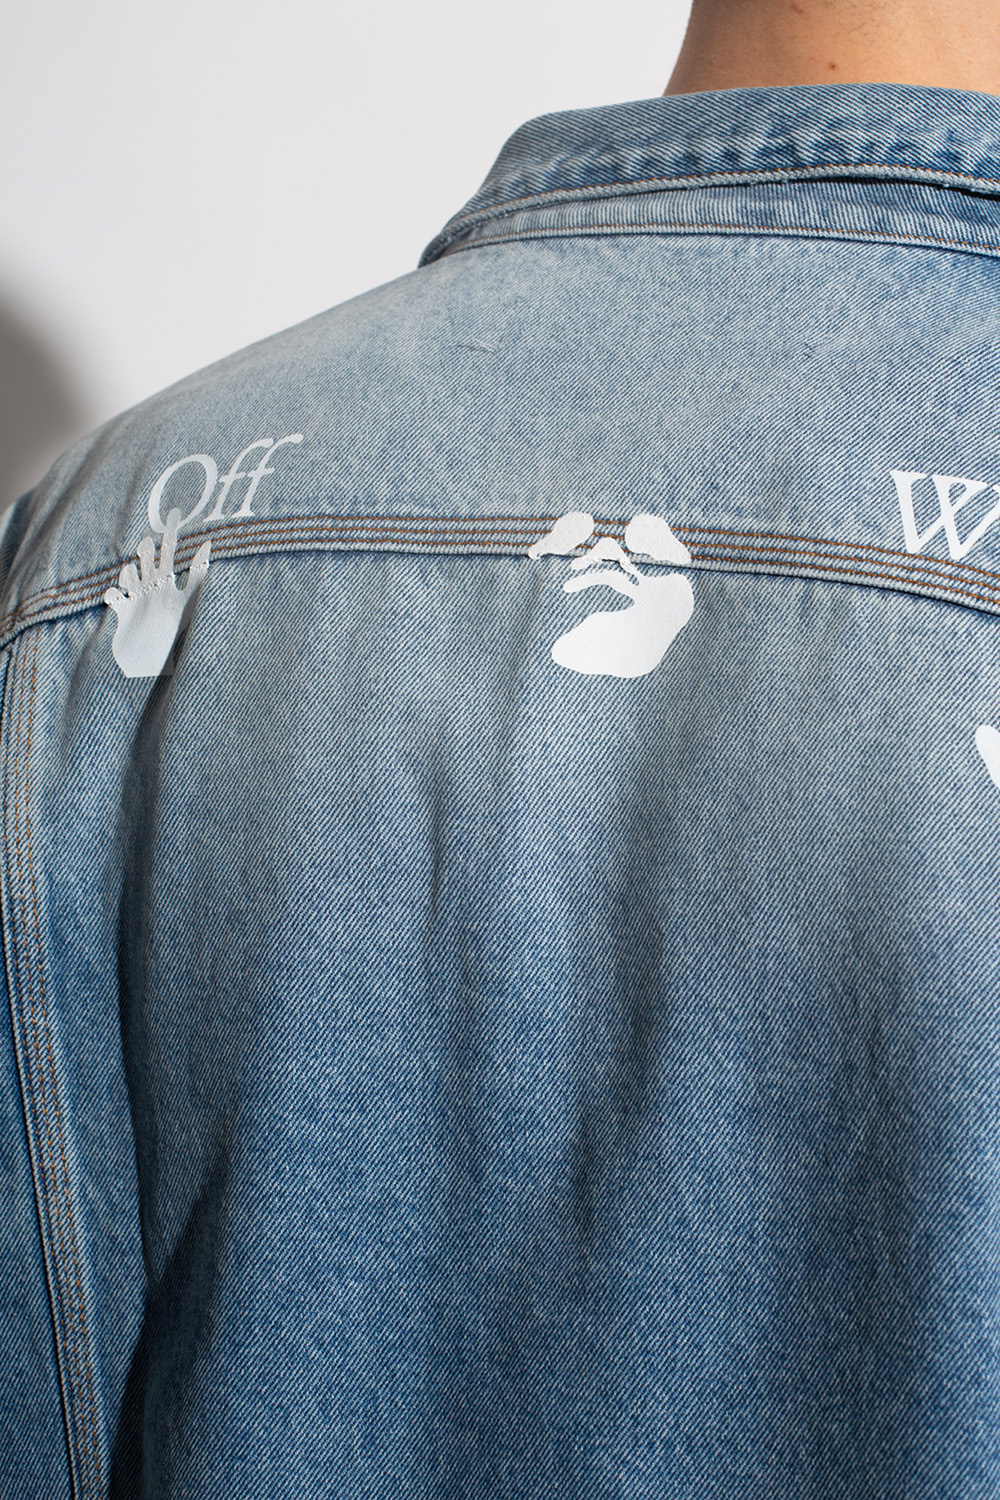 Louis Vuitton Stonewashed Trucker Jacket Blue. Size 36